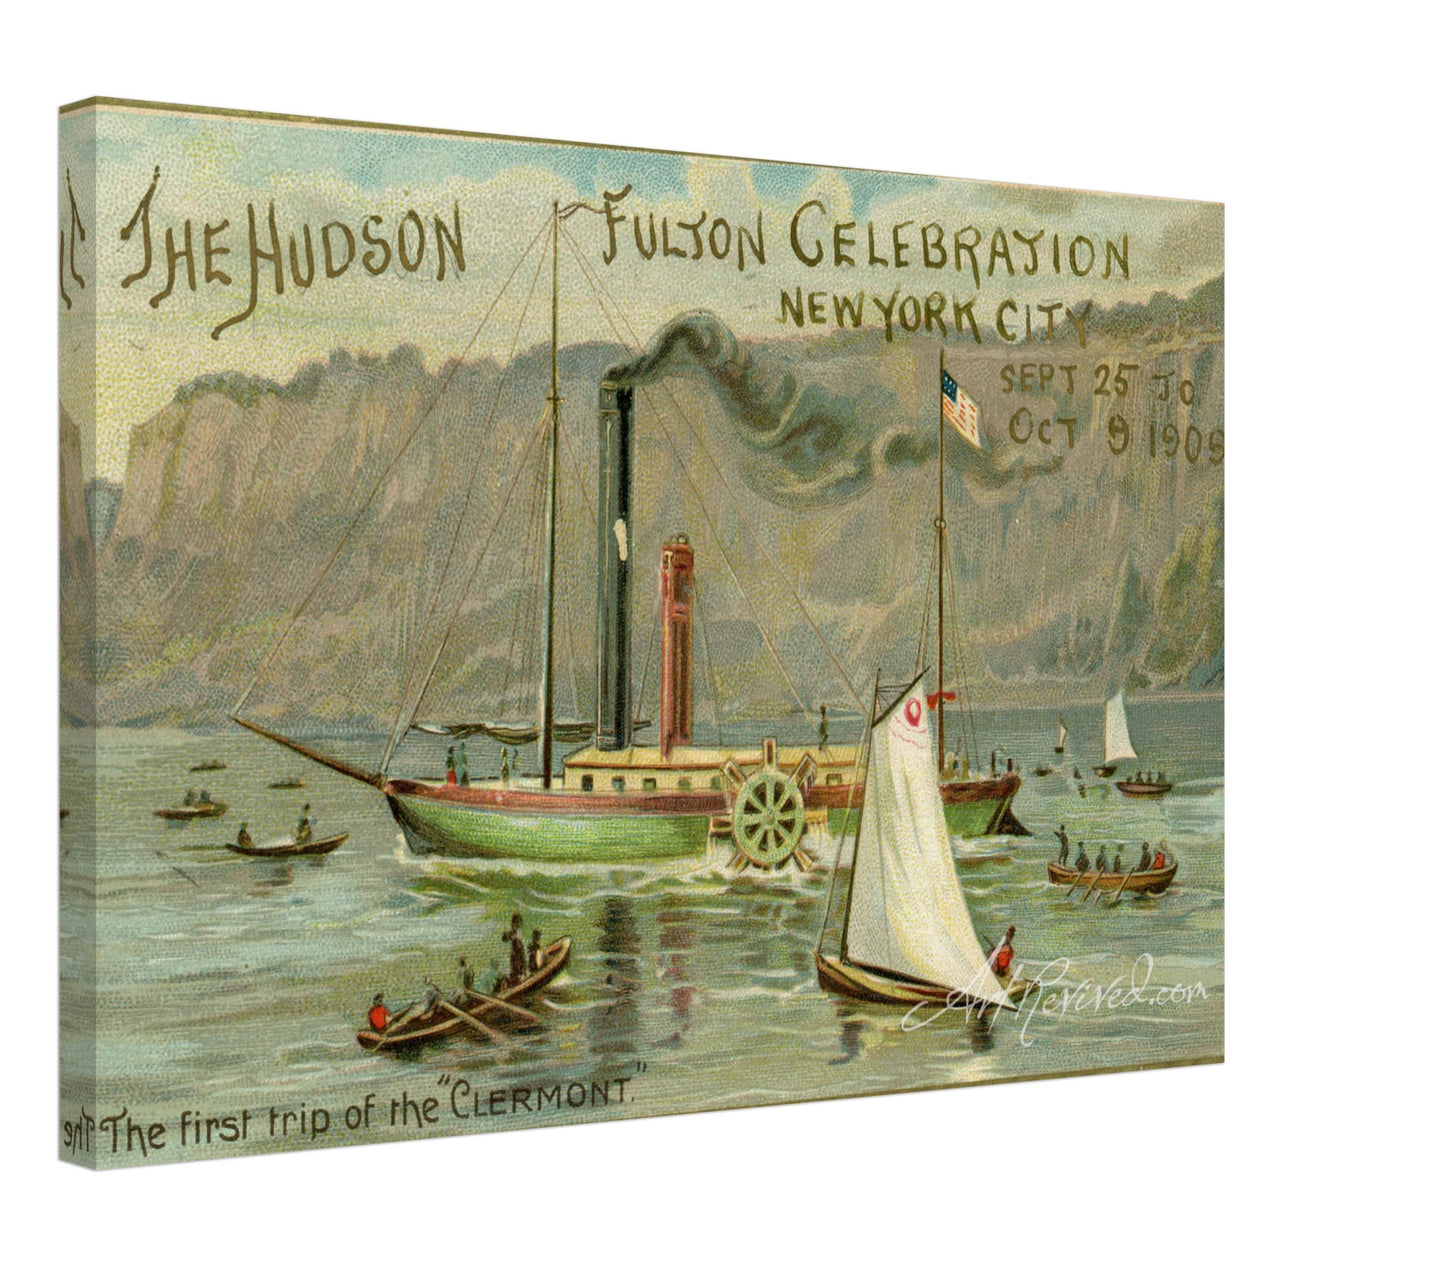 The Hudson Fulton Celebration NYC 1909